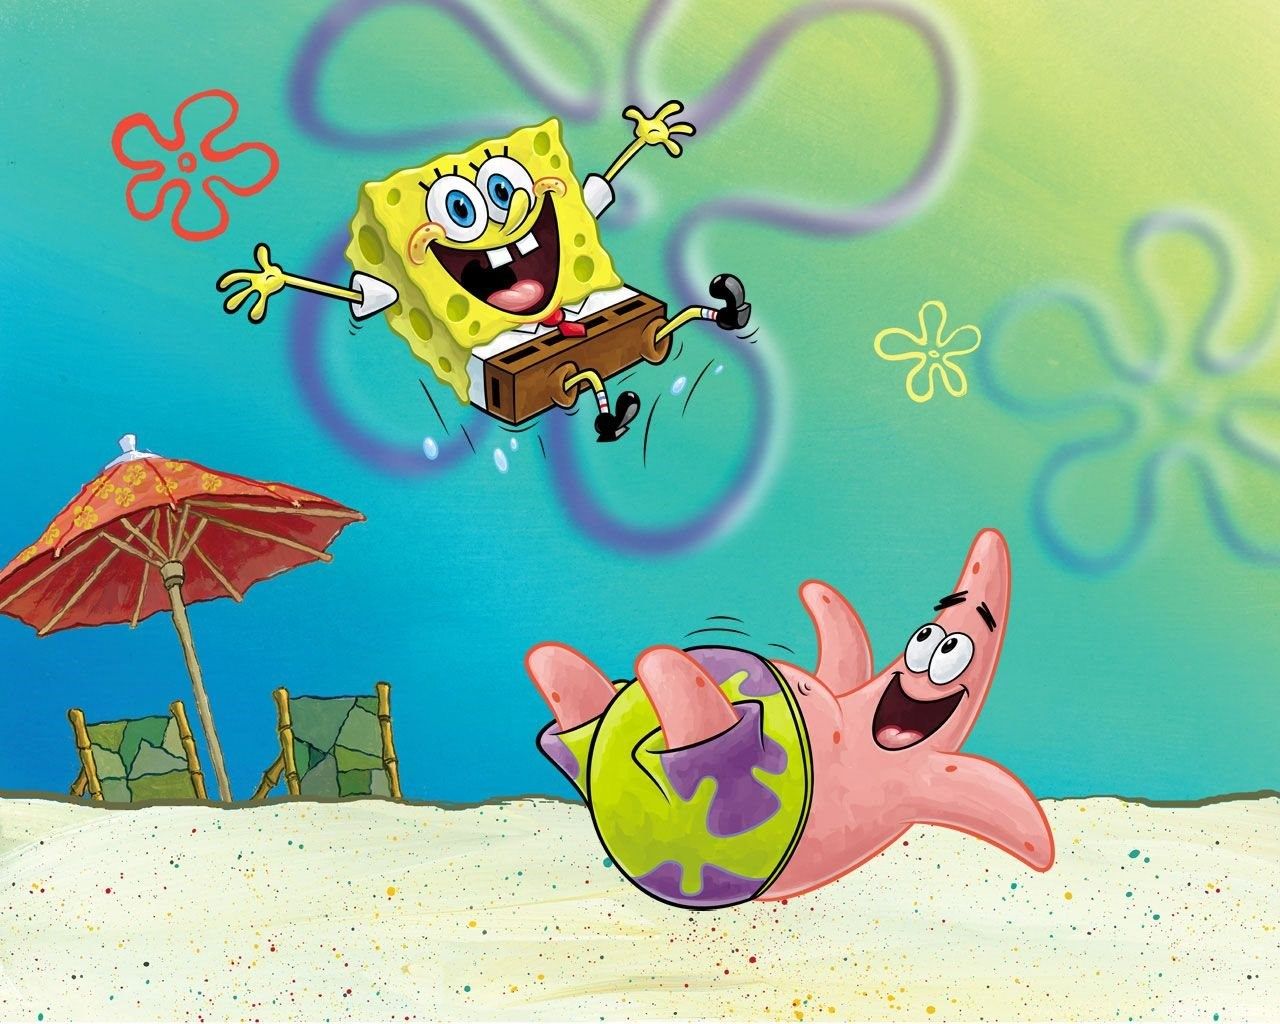 SpongeBob SquarePants and Patrick Star are having fun on the beach. - SpongeBob